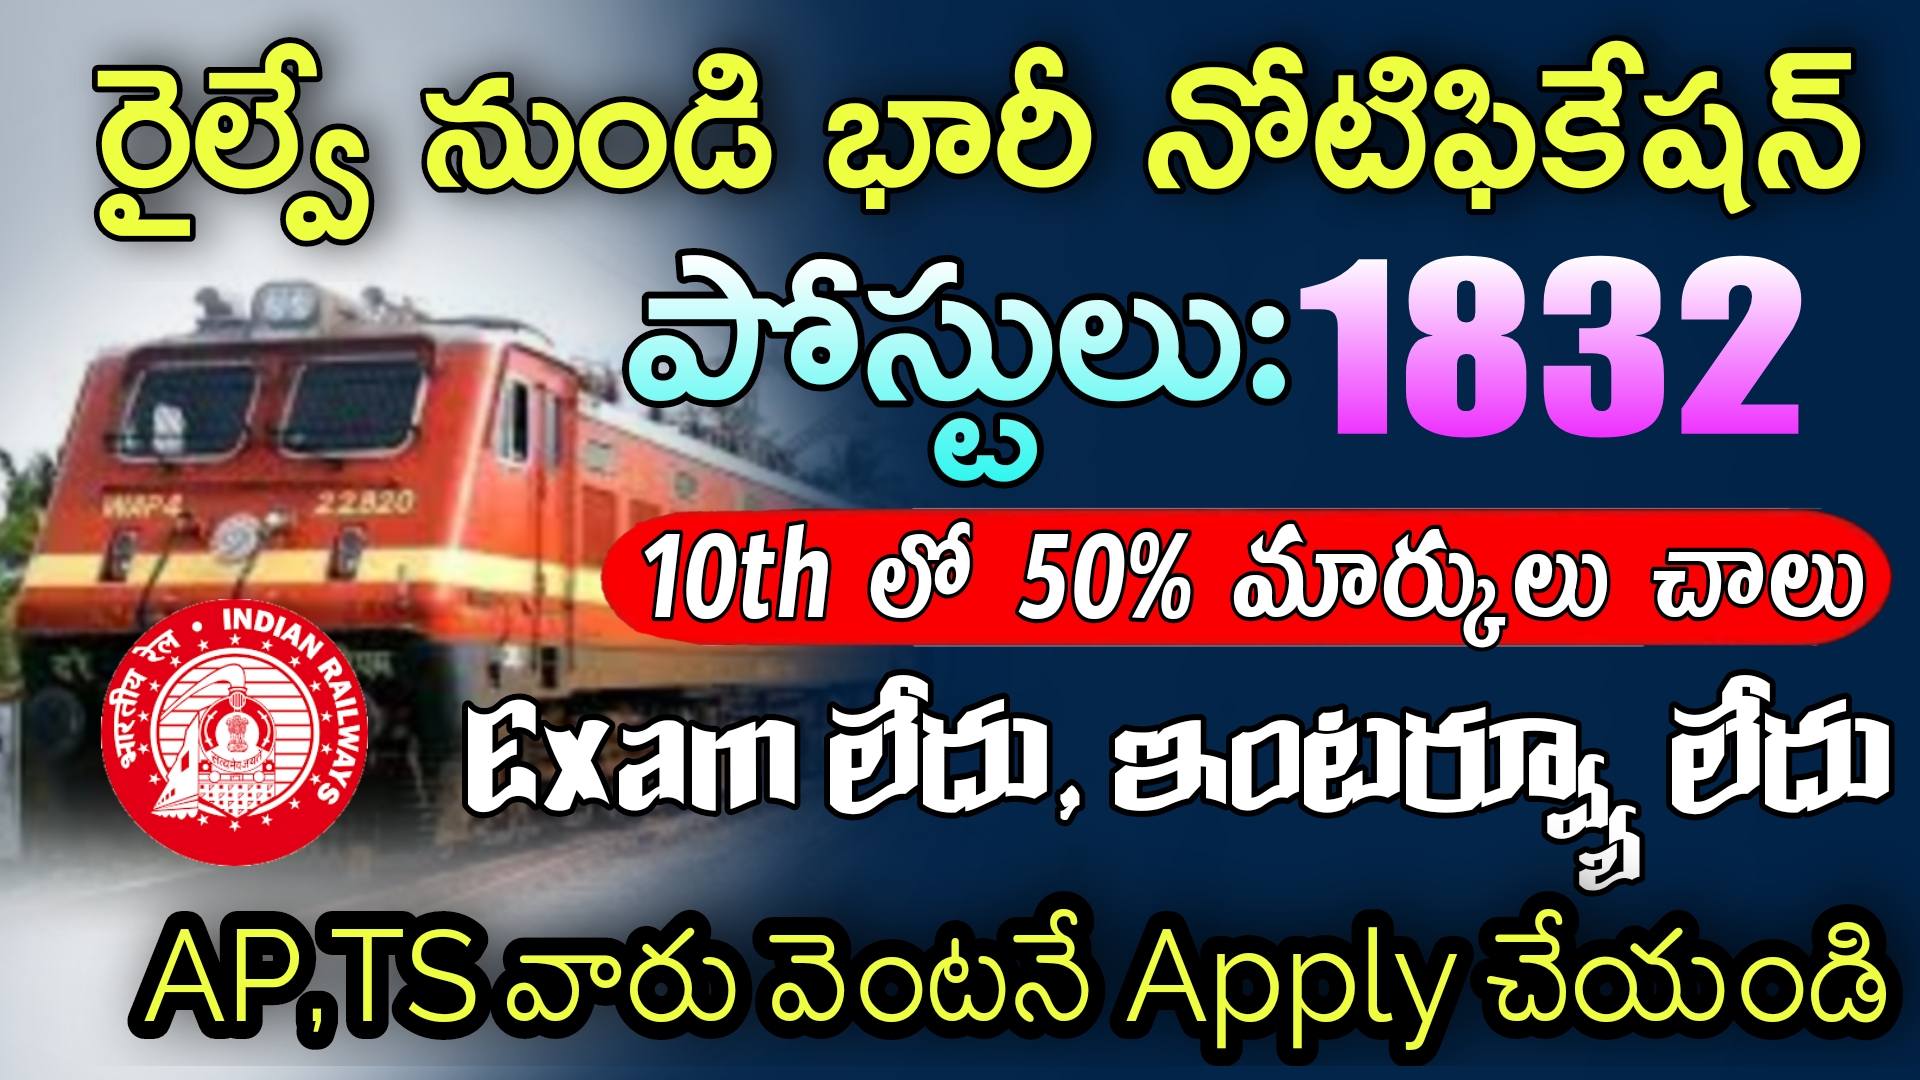 Railway Recruitment 2023 : రైల్వే వాళ్లు ట్రైనింగ్ ఇచ్చి పర్మినెంట్ జాబ్ ఇస్తారు  | RRC ECR Jobs Apprenticeship Notification 2023 in Telugu 